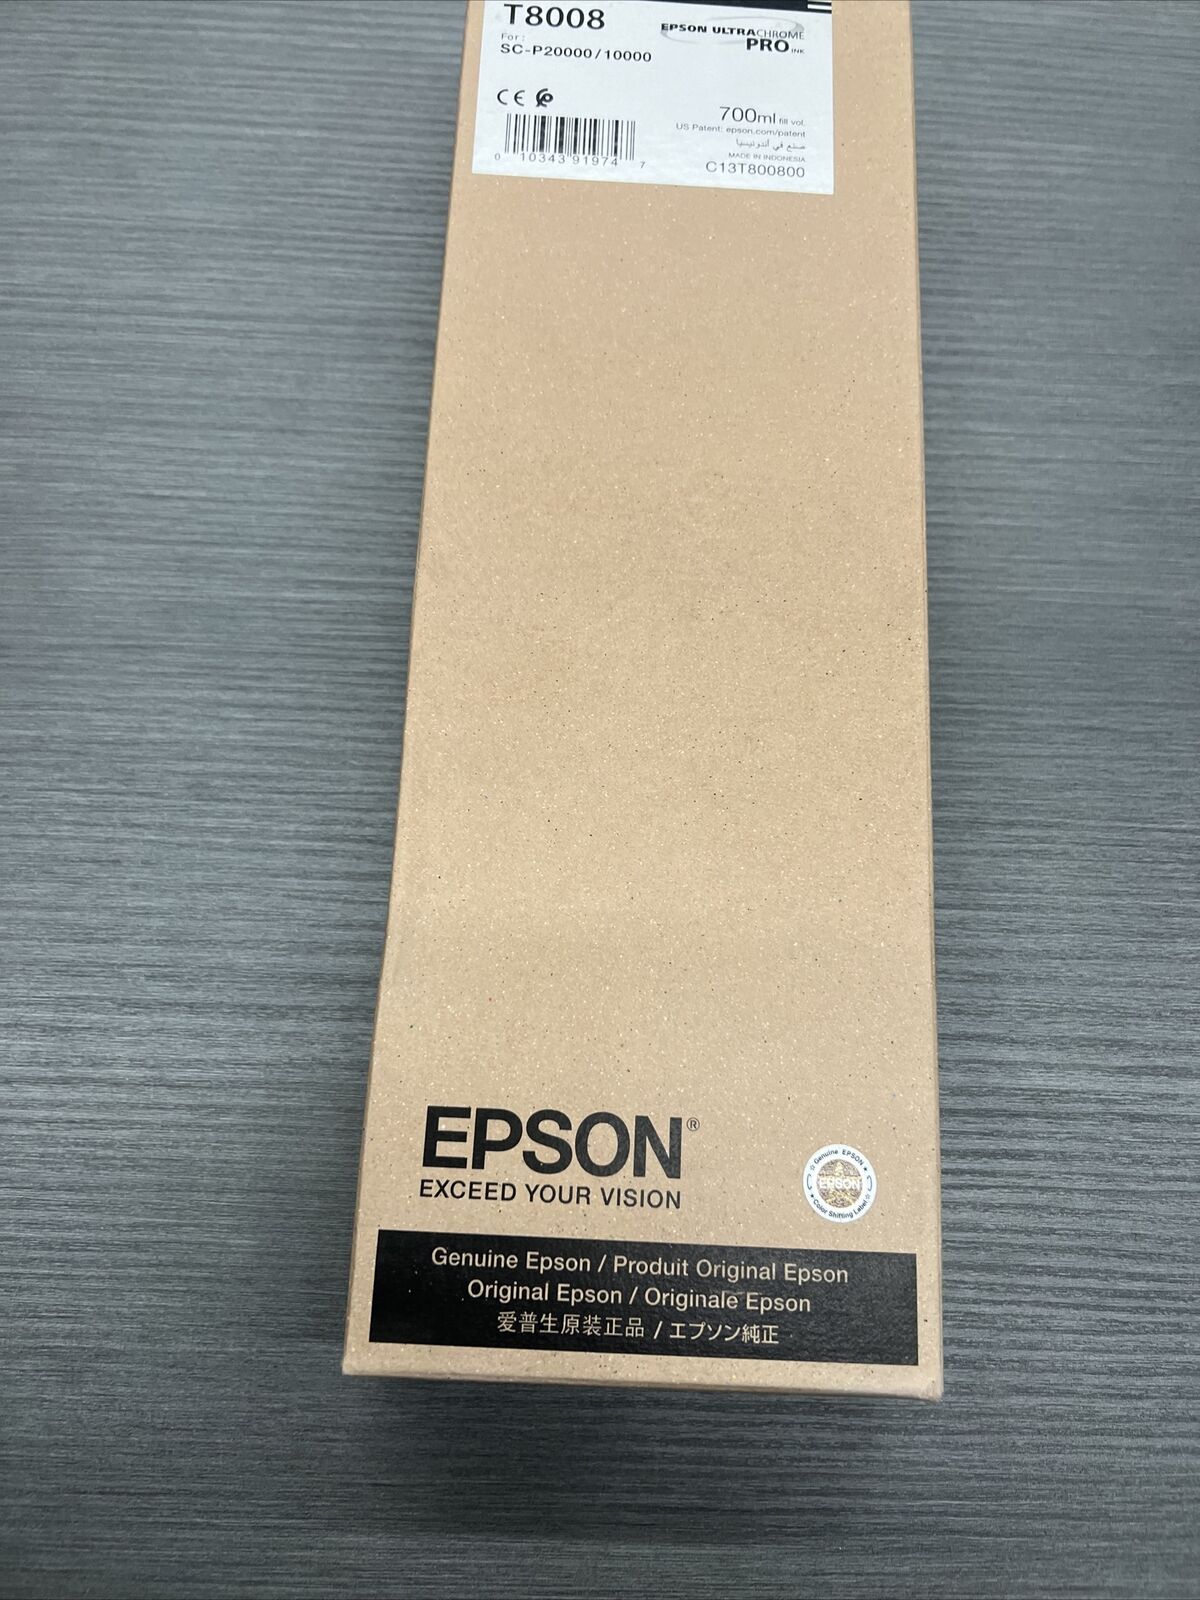 Epson T8008 Ink C13T800800 Unreal Chrome Pro